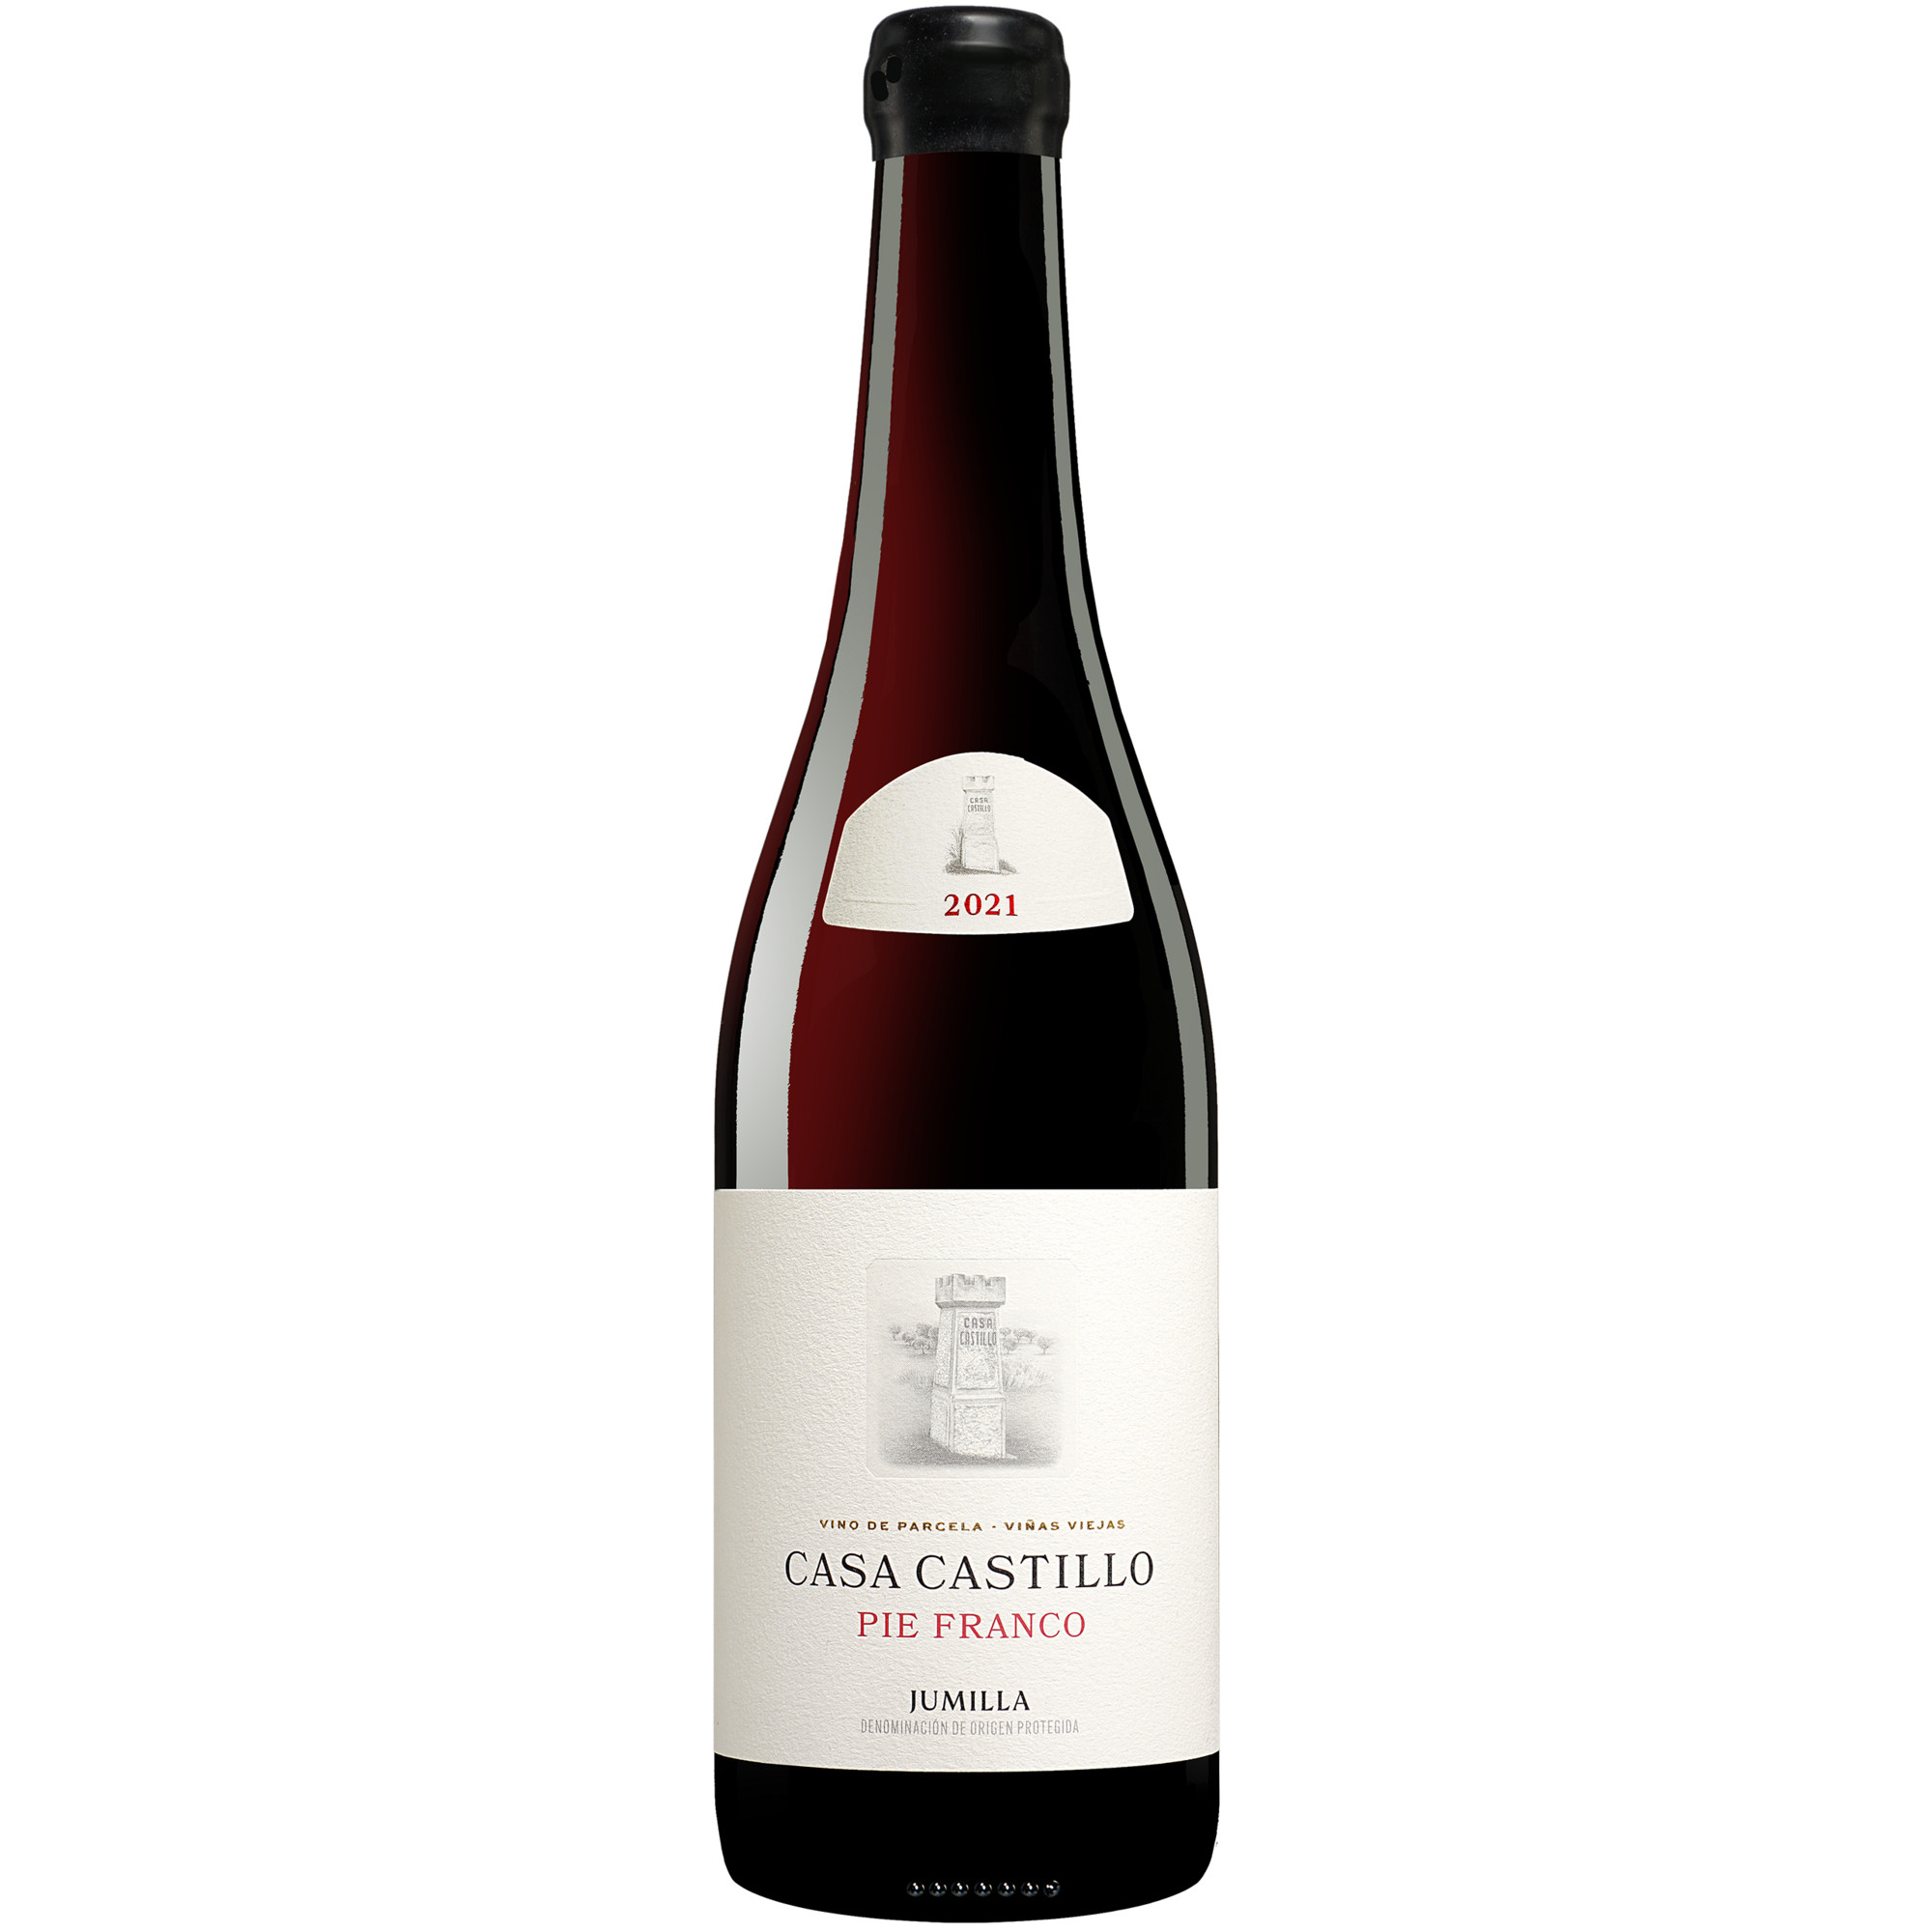 Casa Castillo »Pie Franco« 2021  015% Vol. Rotwein Trocken aus Spanien